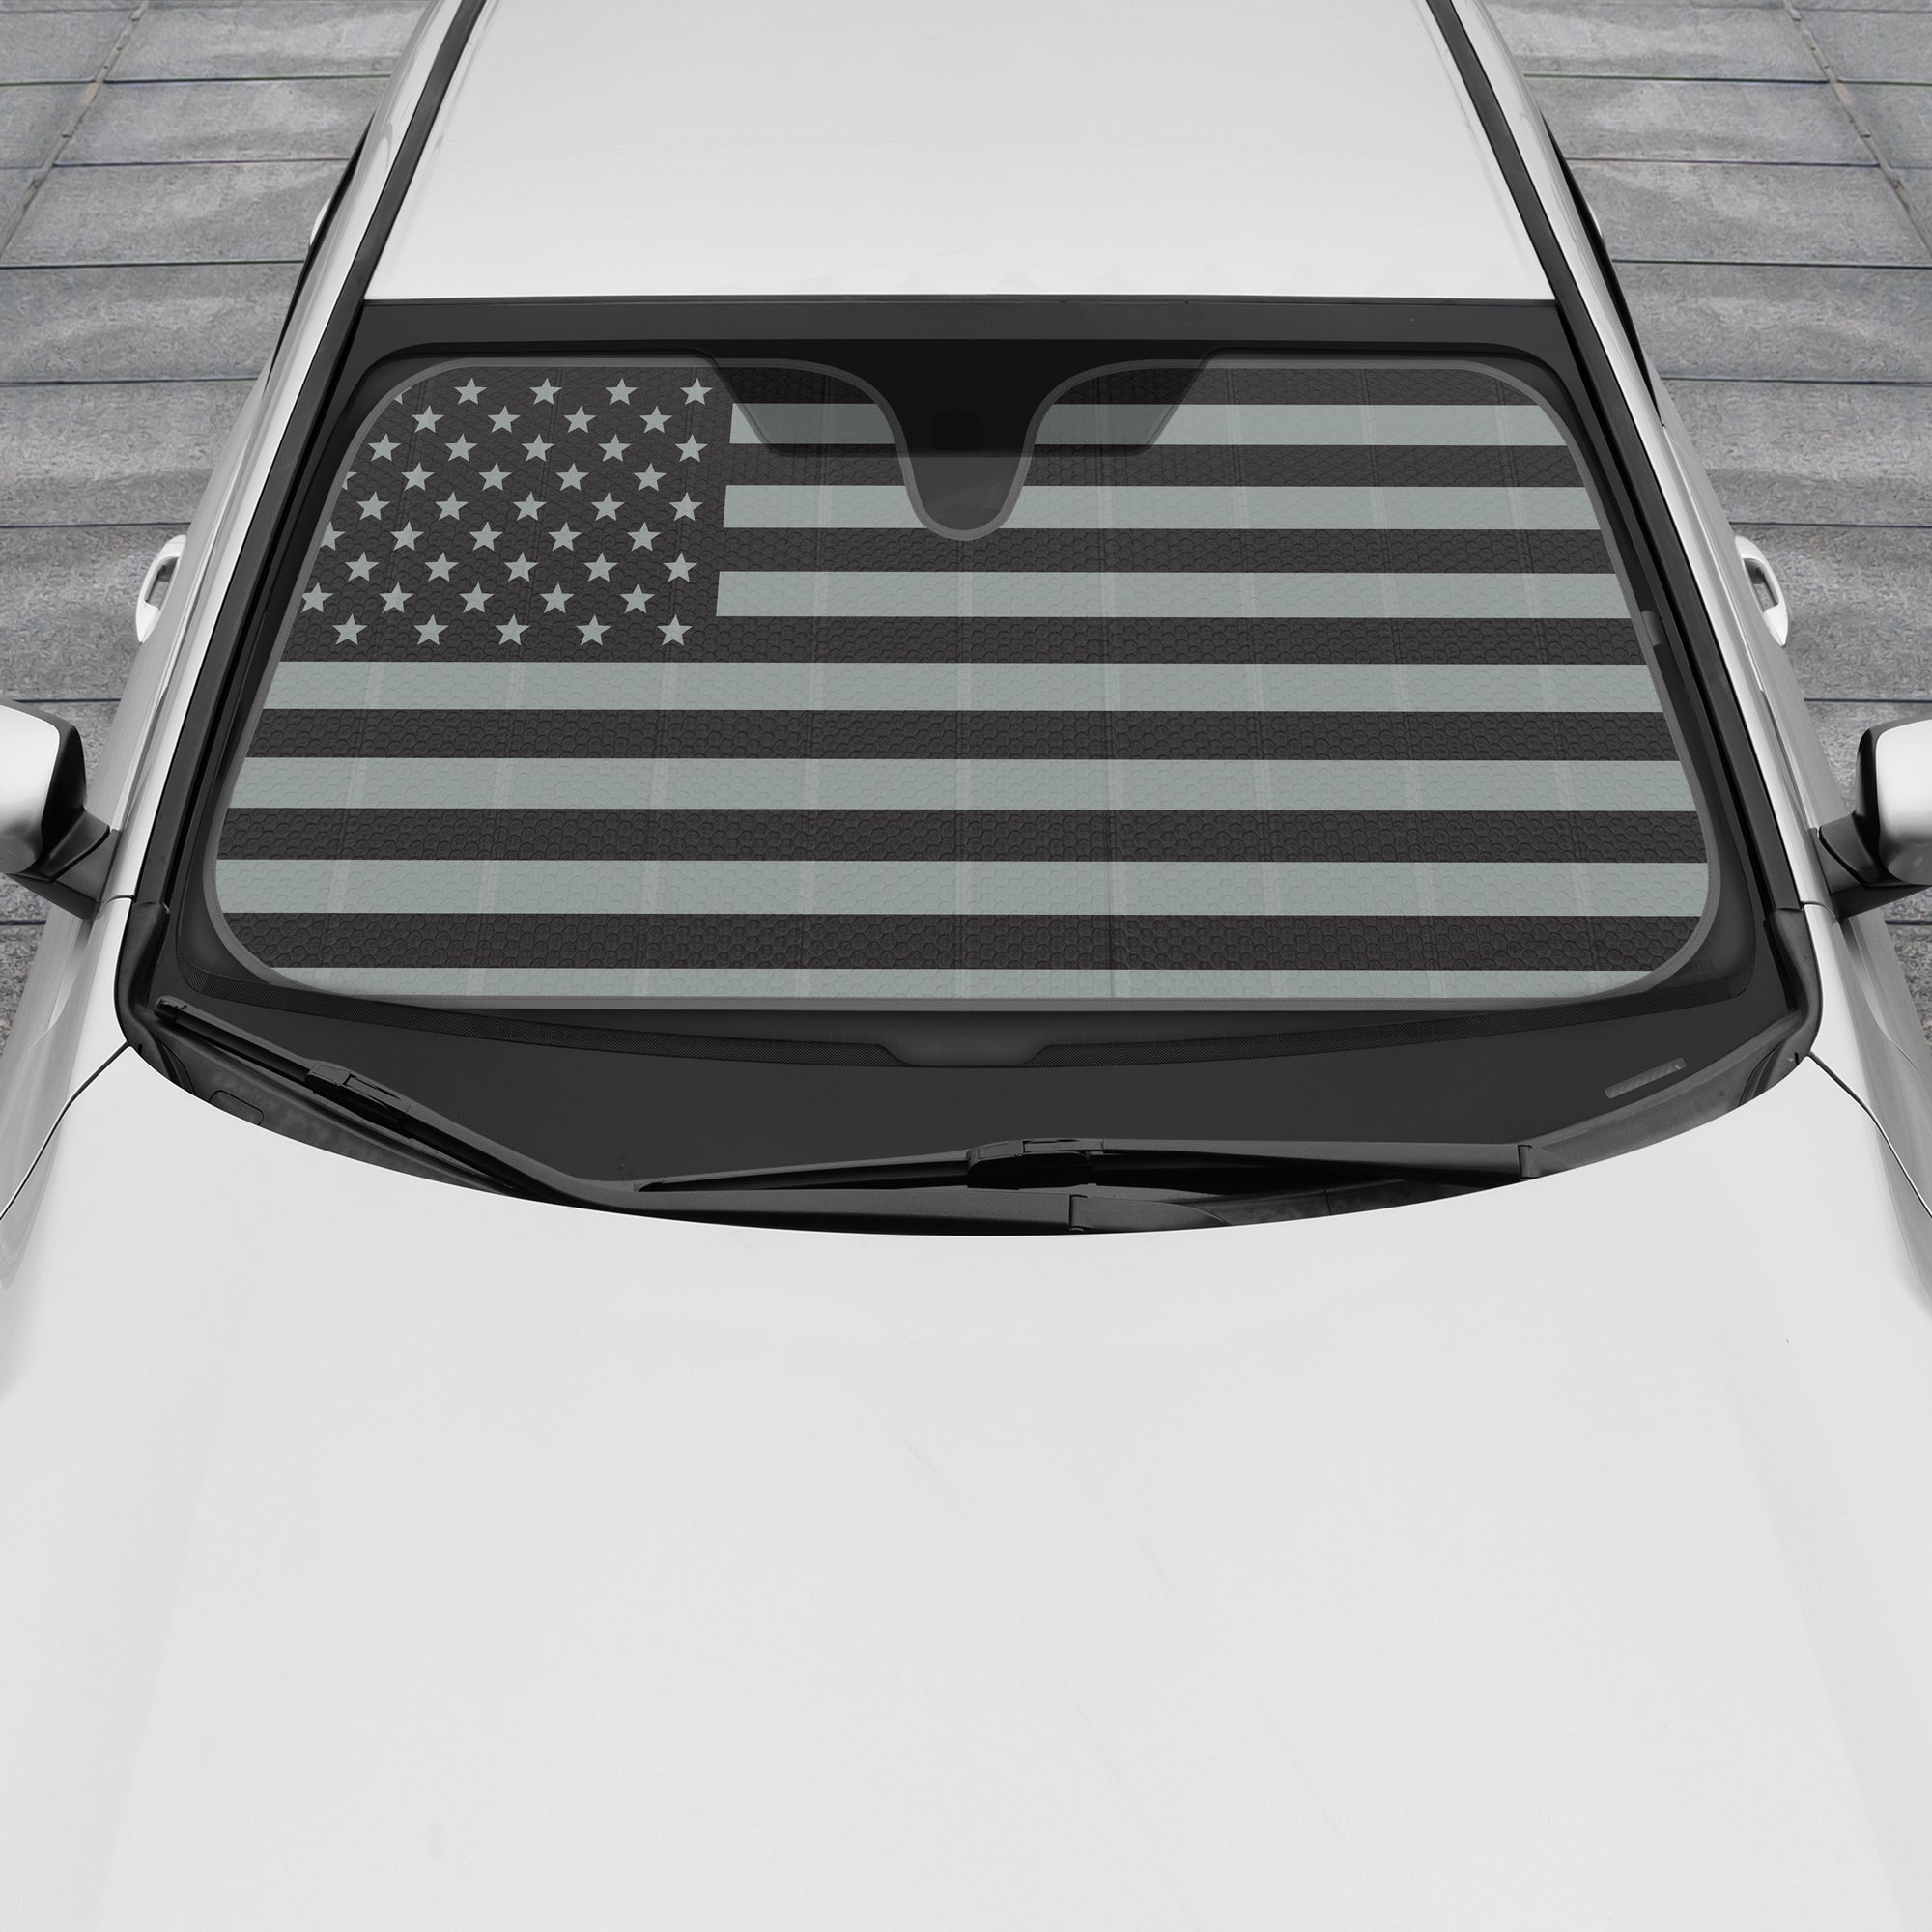 BDK American Flag Windshield Sunshade for Car Truck & SUV - Folding Car Sun Shade for Front Window, Auto Sun Visor Heat Protection, Car Sunscreen Blocks UV Rays and Keeps Vehicle Cool (58 x 27 Inch)